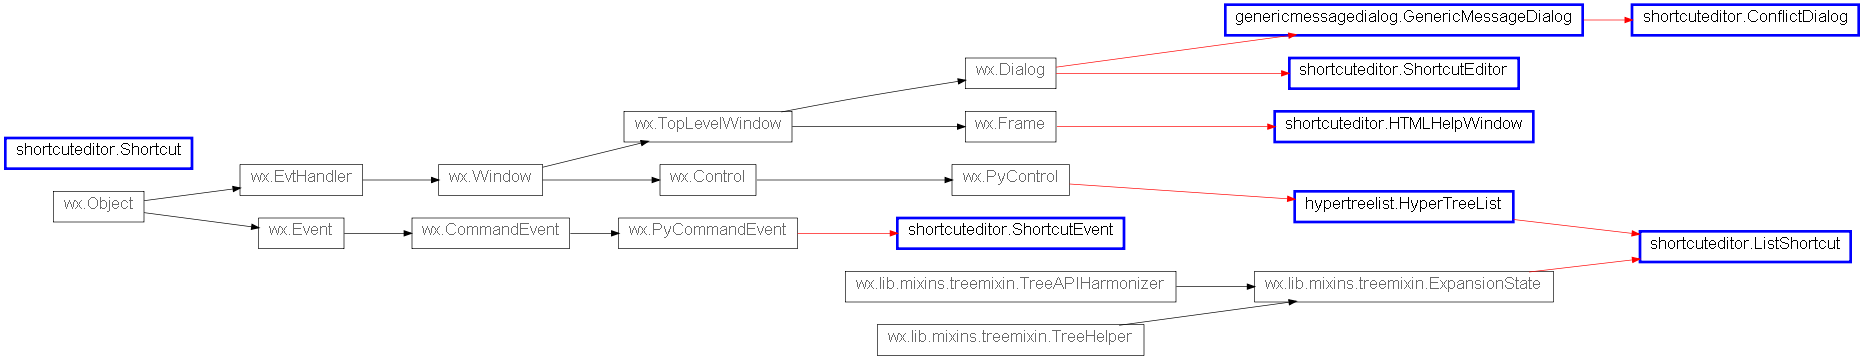 Inheritance diagram of shortcuteditor.ConflictDialog, shortcuteditor.HTMLHelpWindow, shortcuteditor.ListShortcut, shortcuteditor.Shortcut, shortcuteditor.ShortcutEditor, shortcuteditor.ShortcutEvent